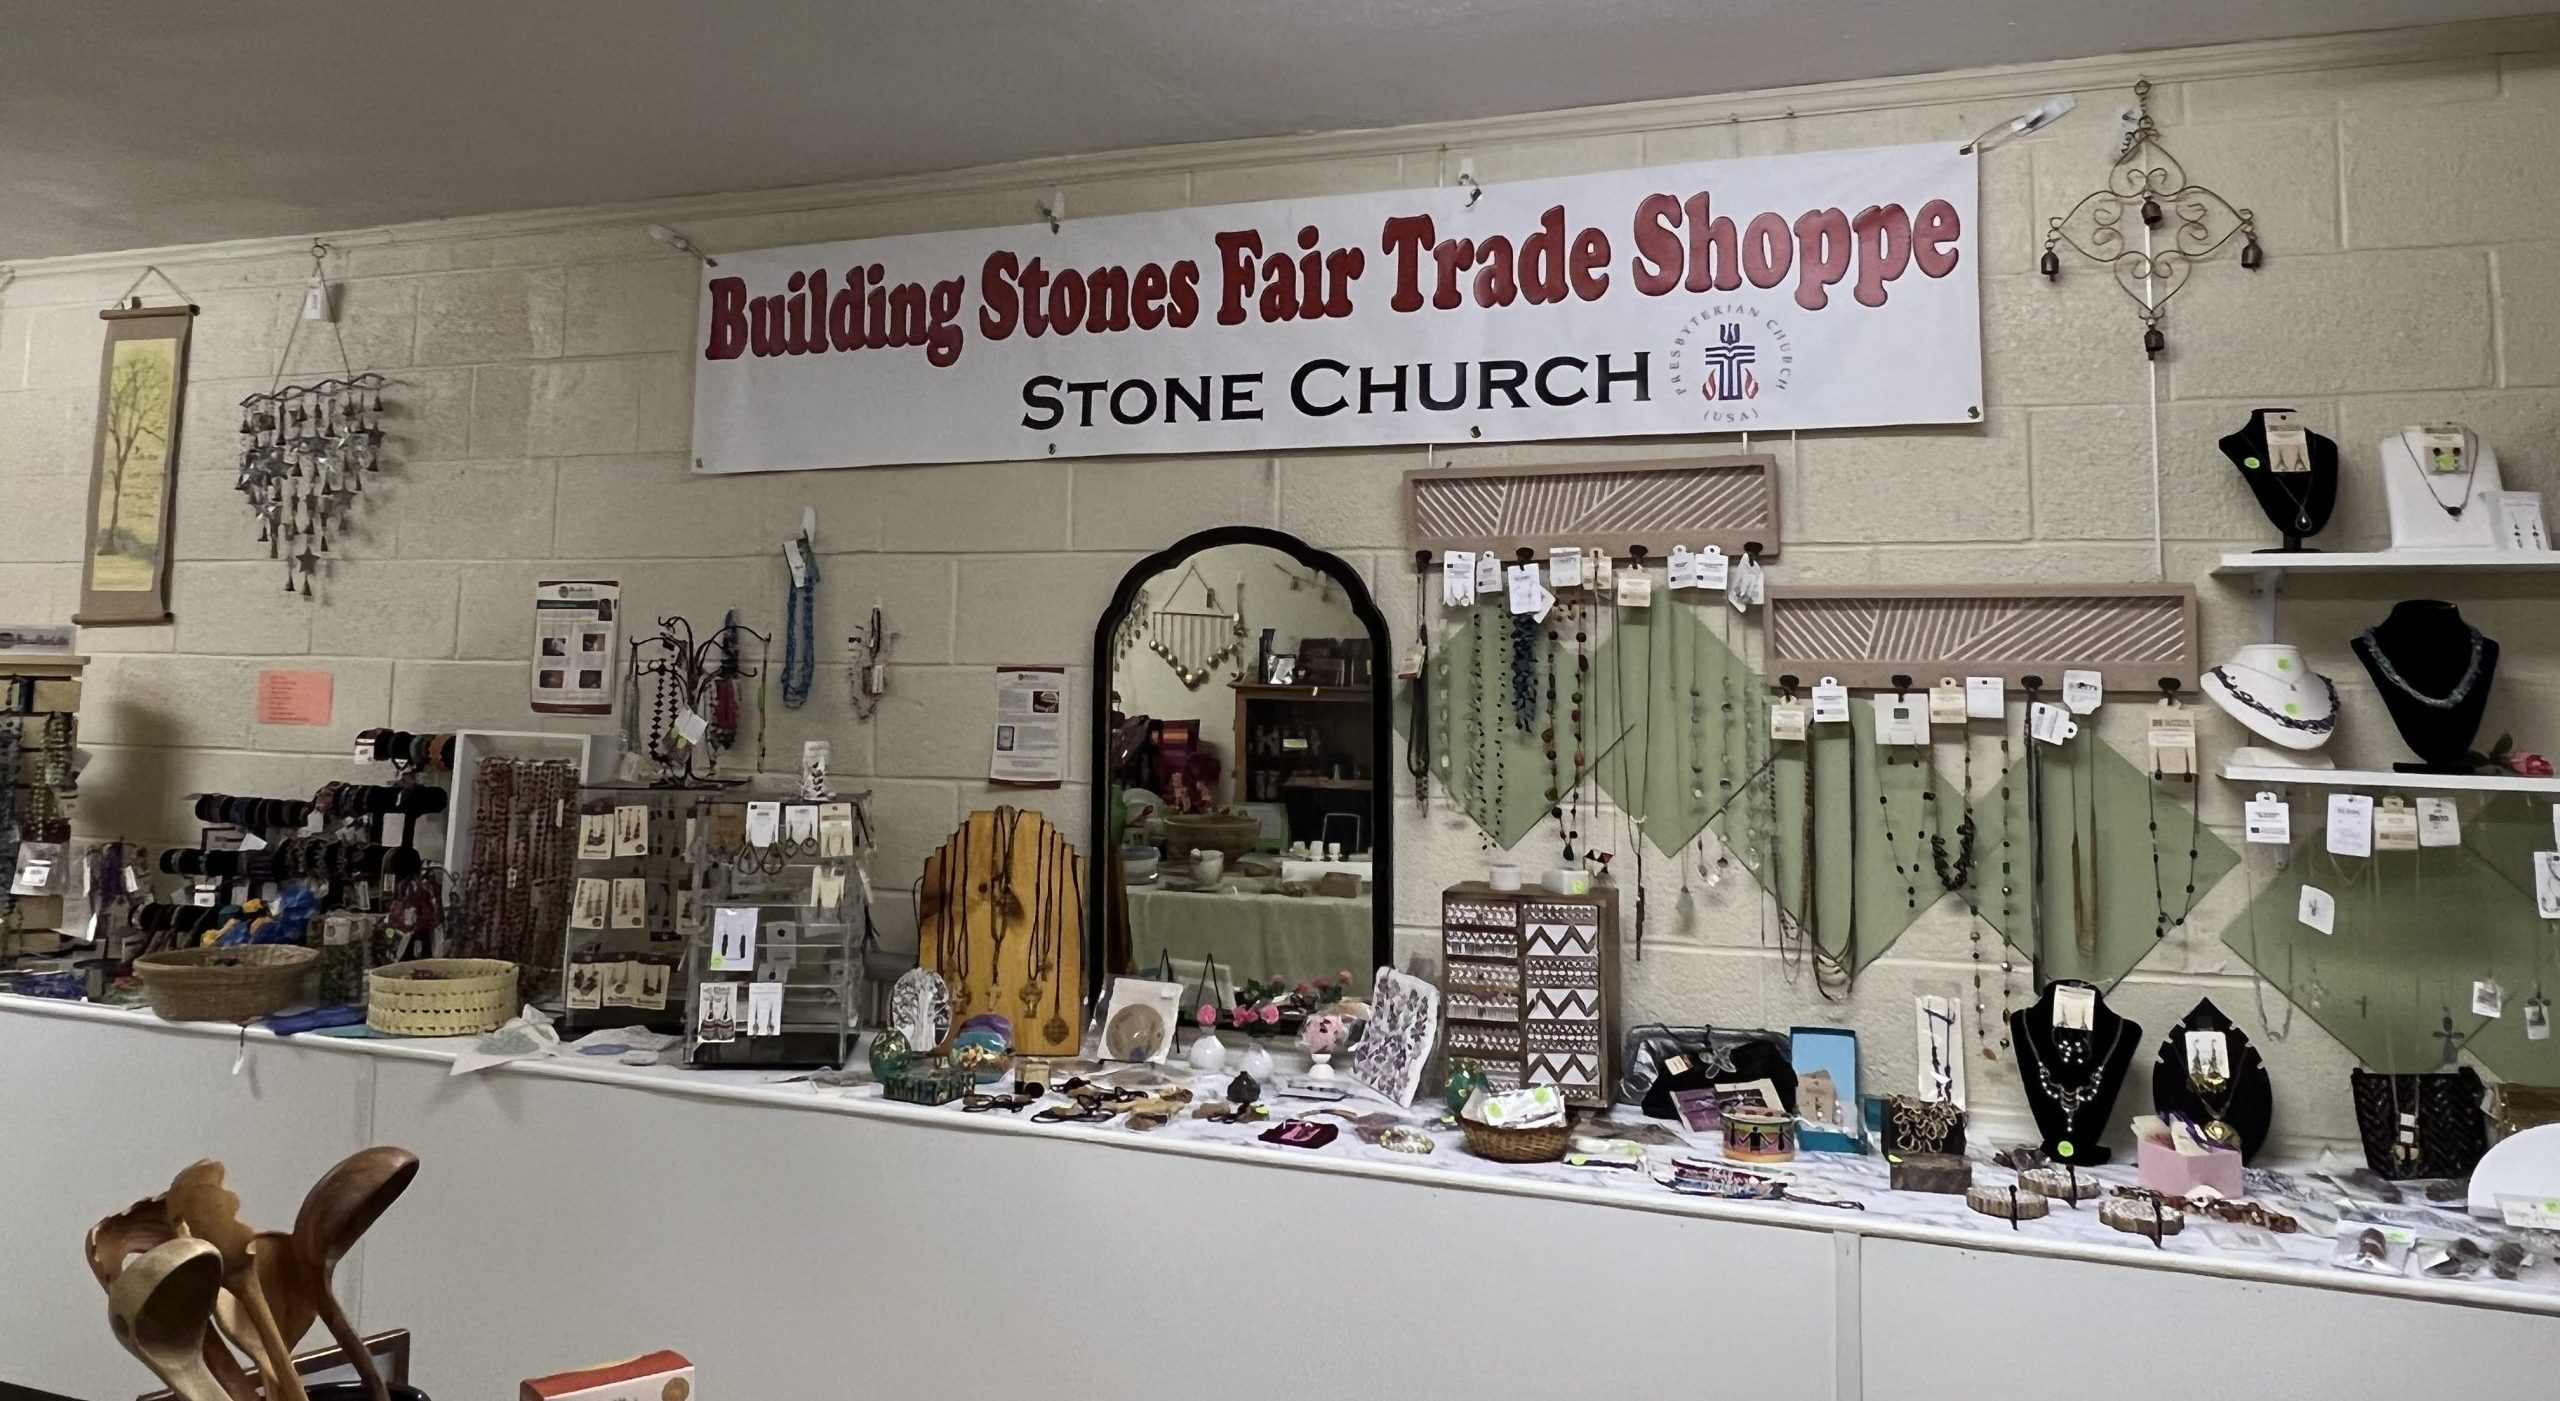 Fair Trade Shoppe inside with items